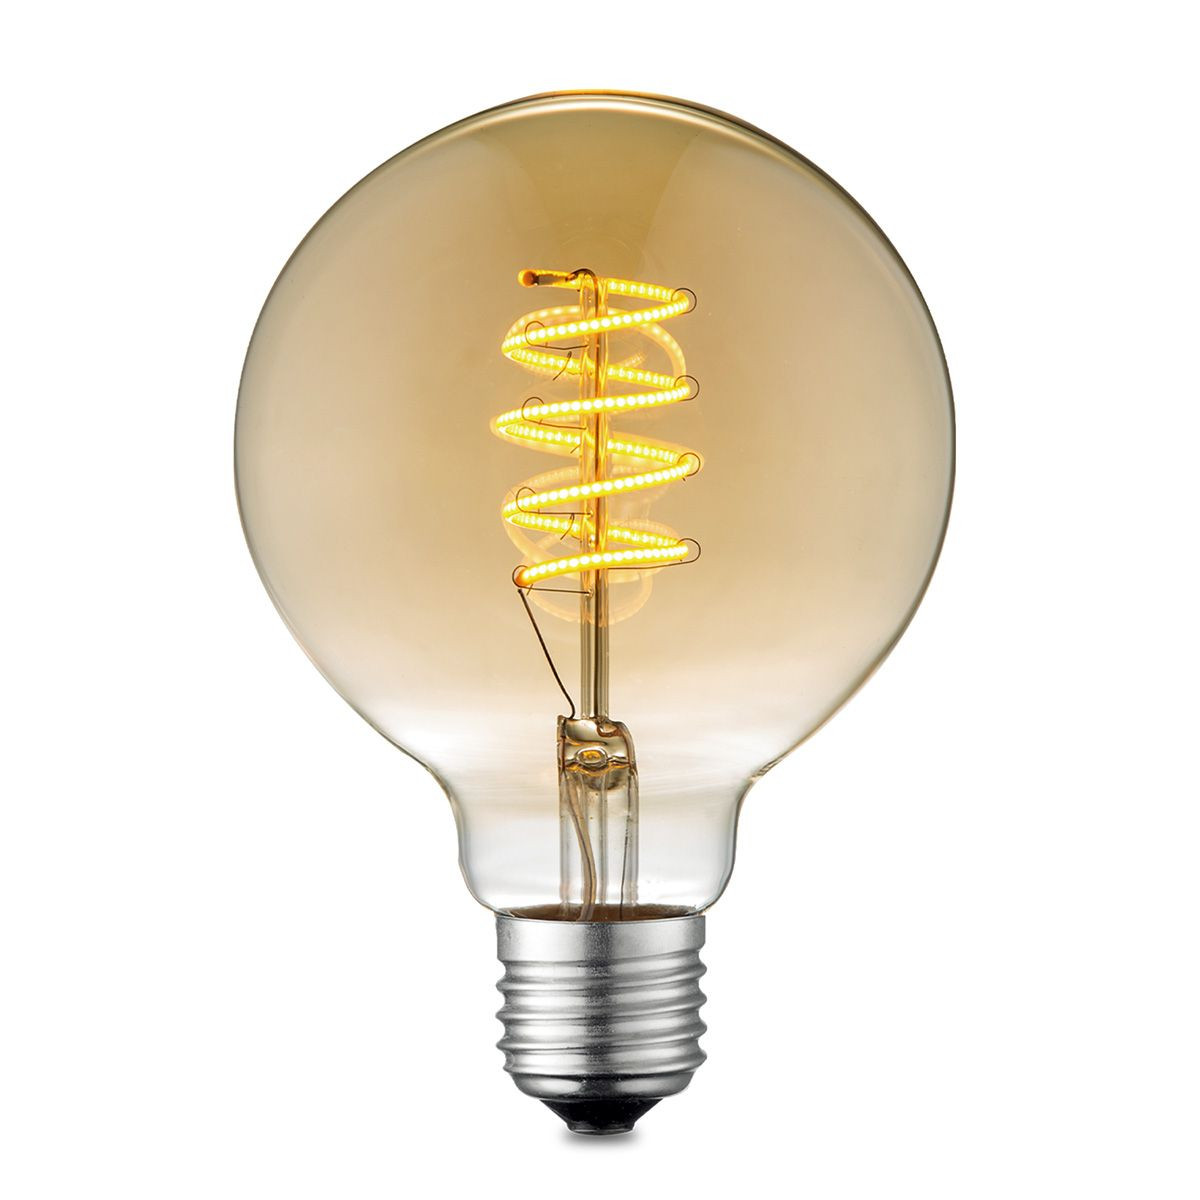 Edison Vintage LED lamp E27 LED filament lichtbron, Spiraal Globe G95, 9.5/9.5/13.5cm, Amber, Retro LED lamp Dimbaar, 4W 280lm 2700K, warm wit licht, geschikt voor E27 fitting